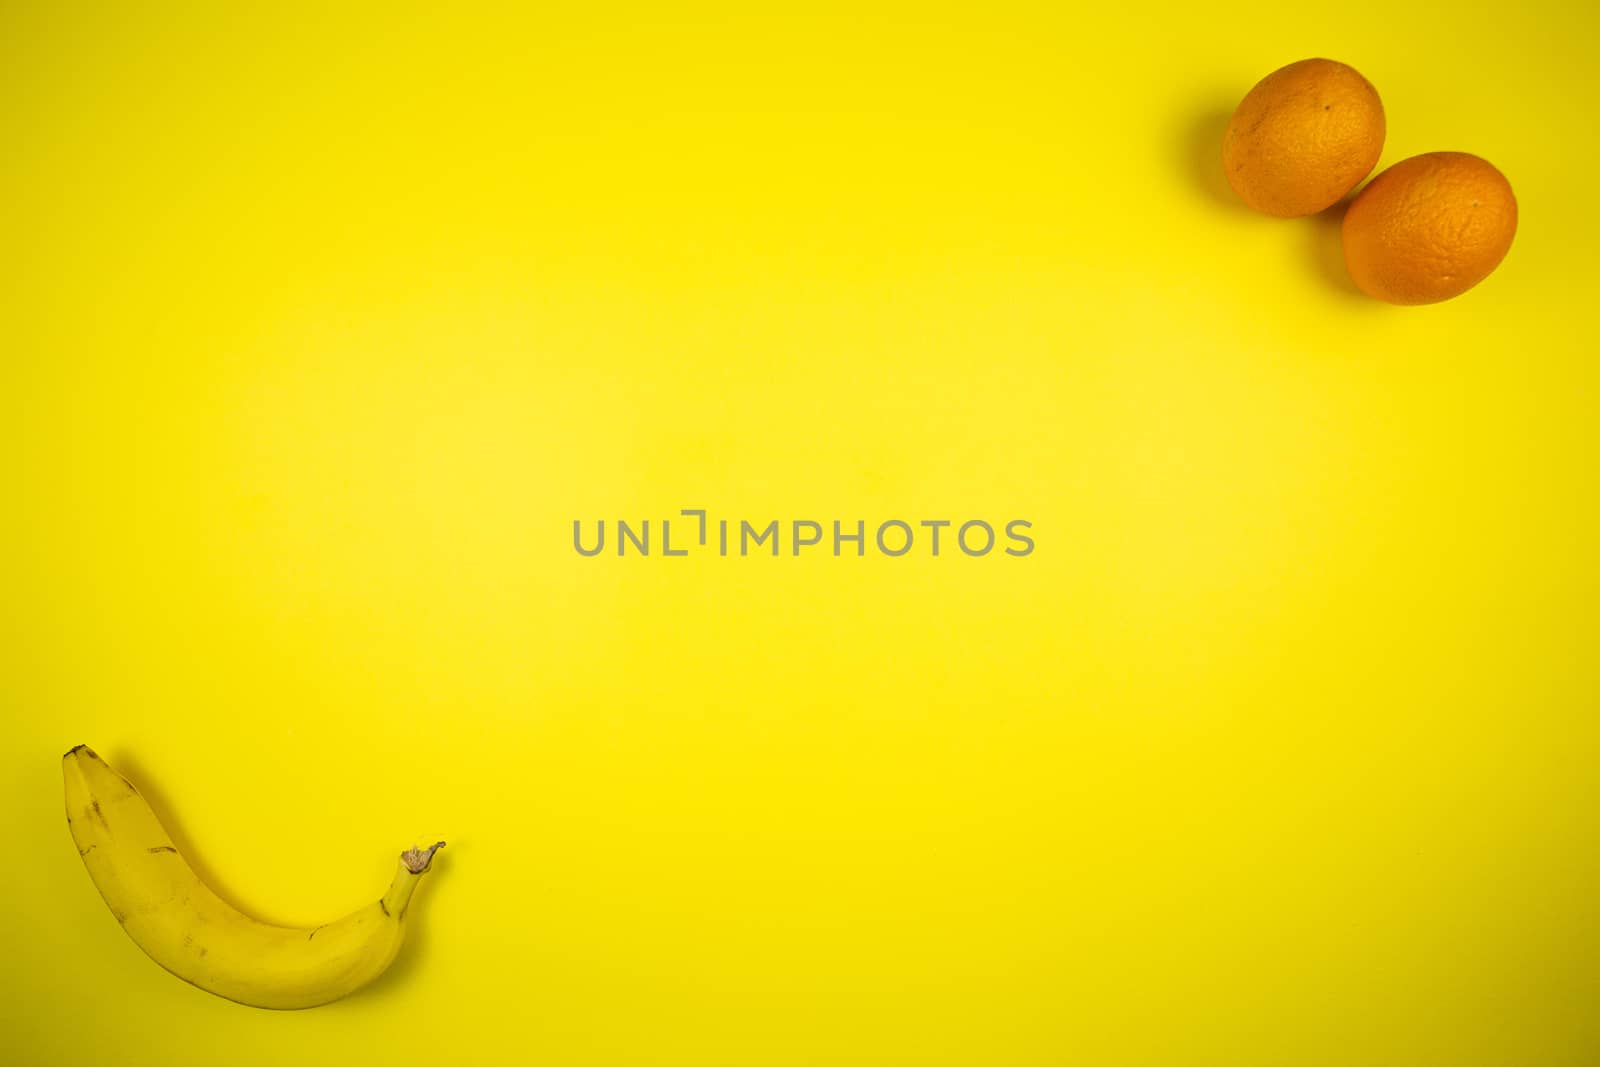 Fruit banana and orange on a yellow background, fruits